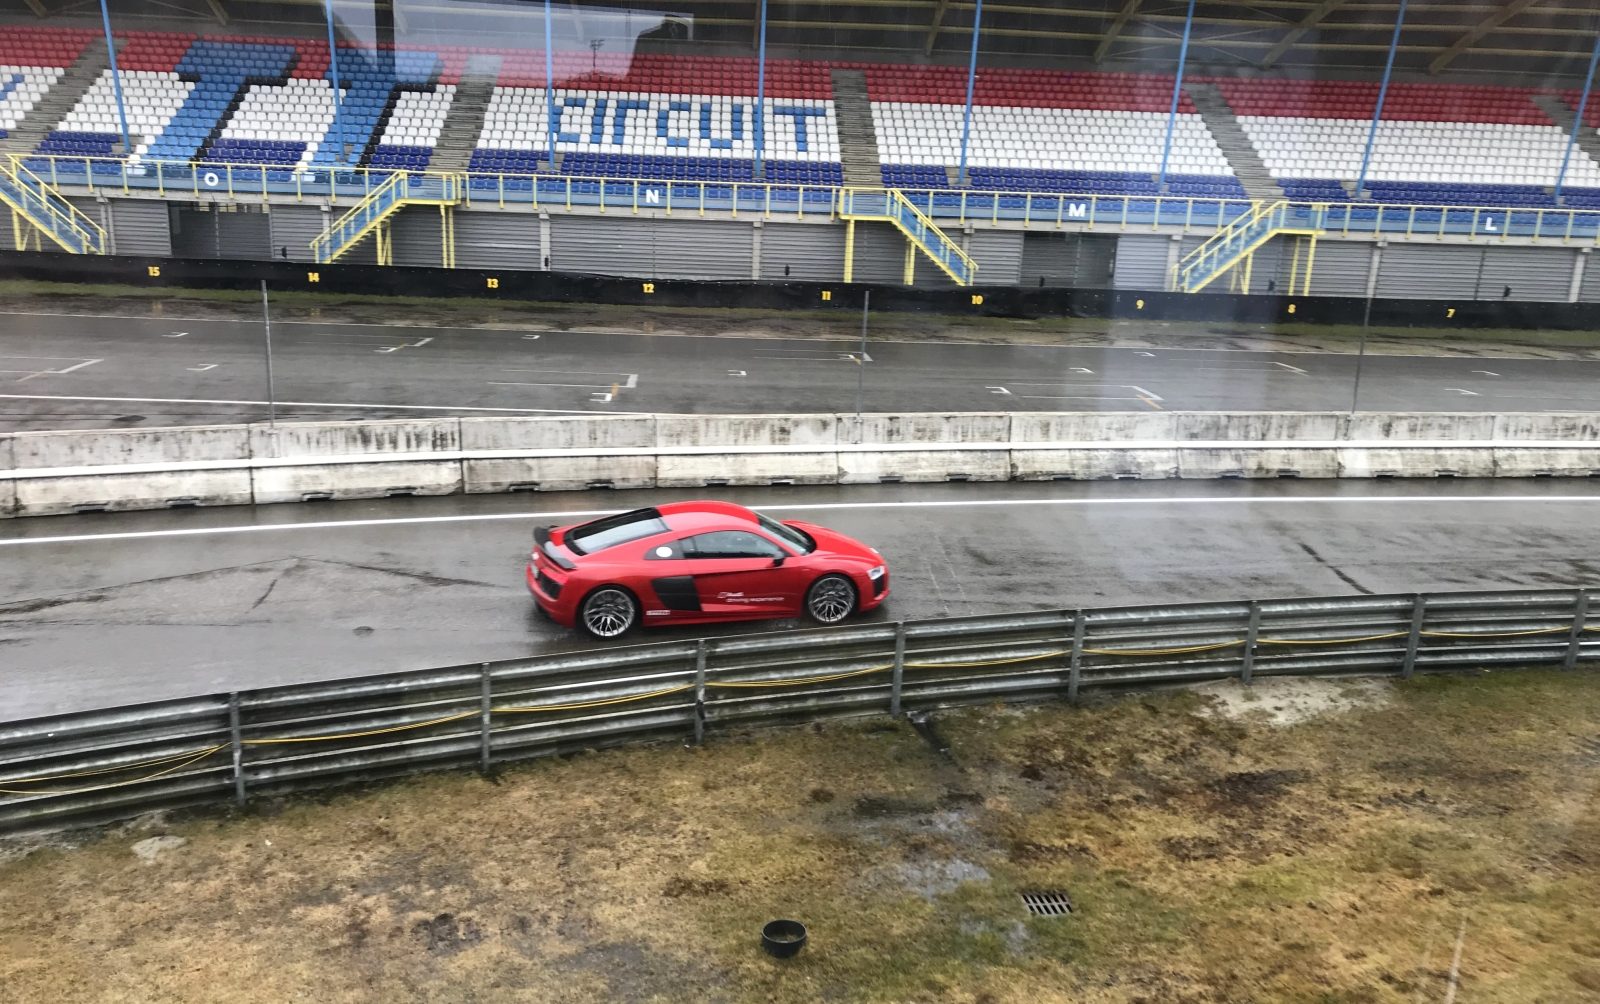 Audi-Sportscar-Experience-Assen-2018-Fot